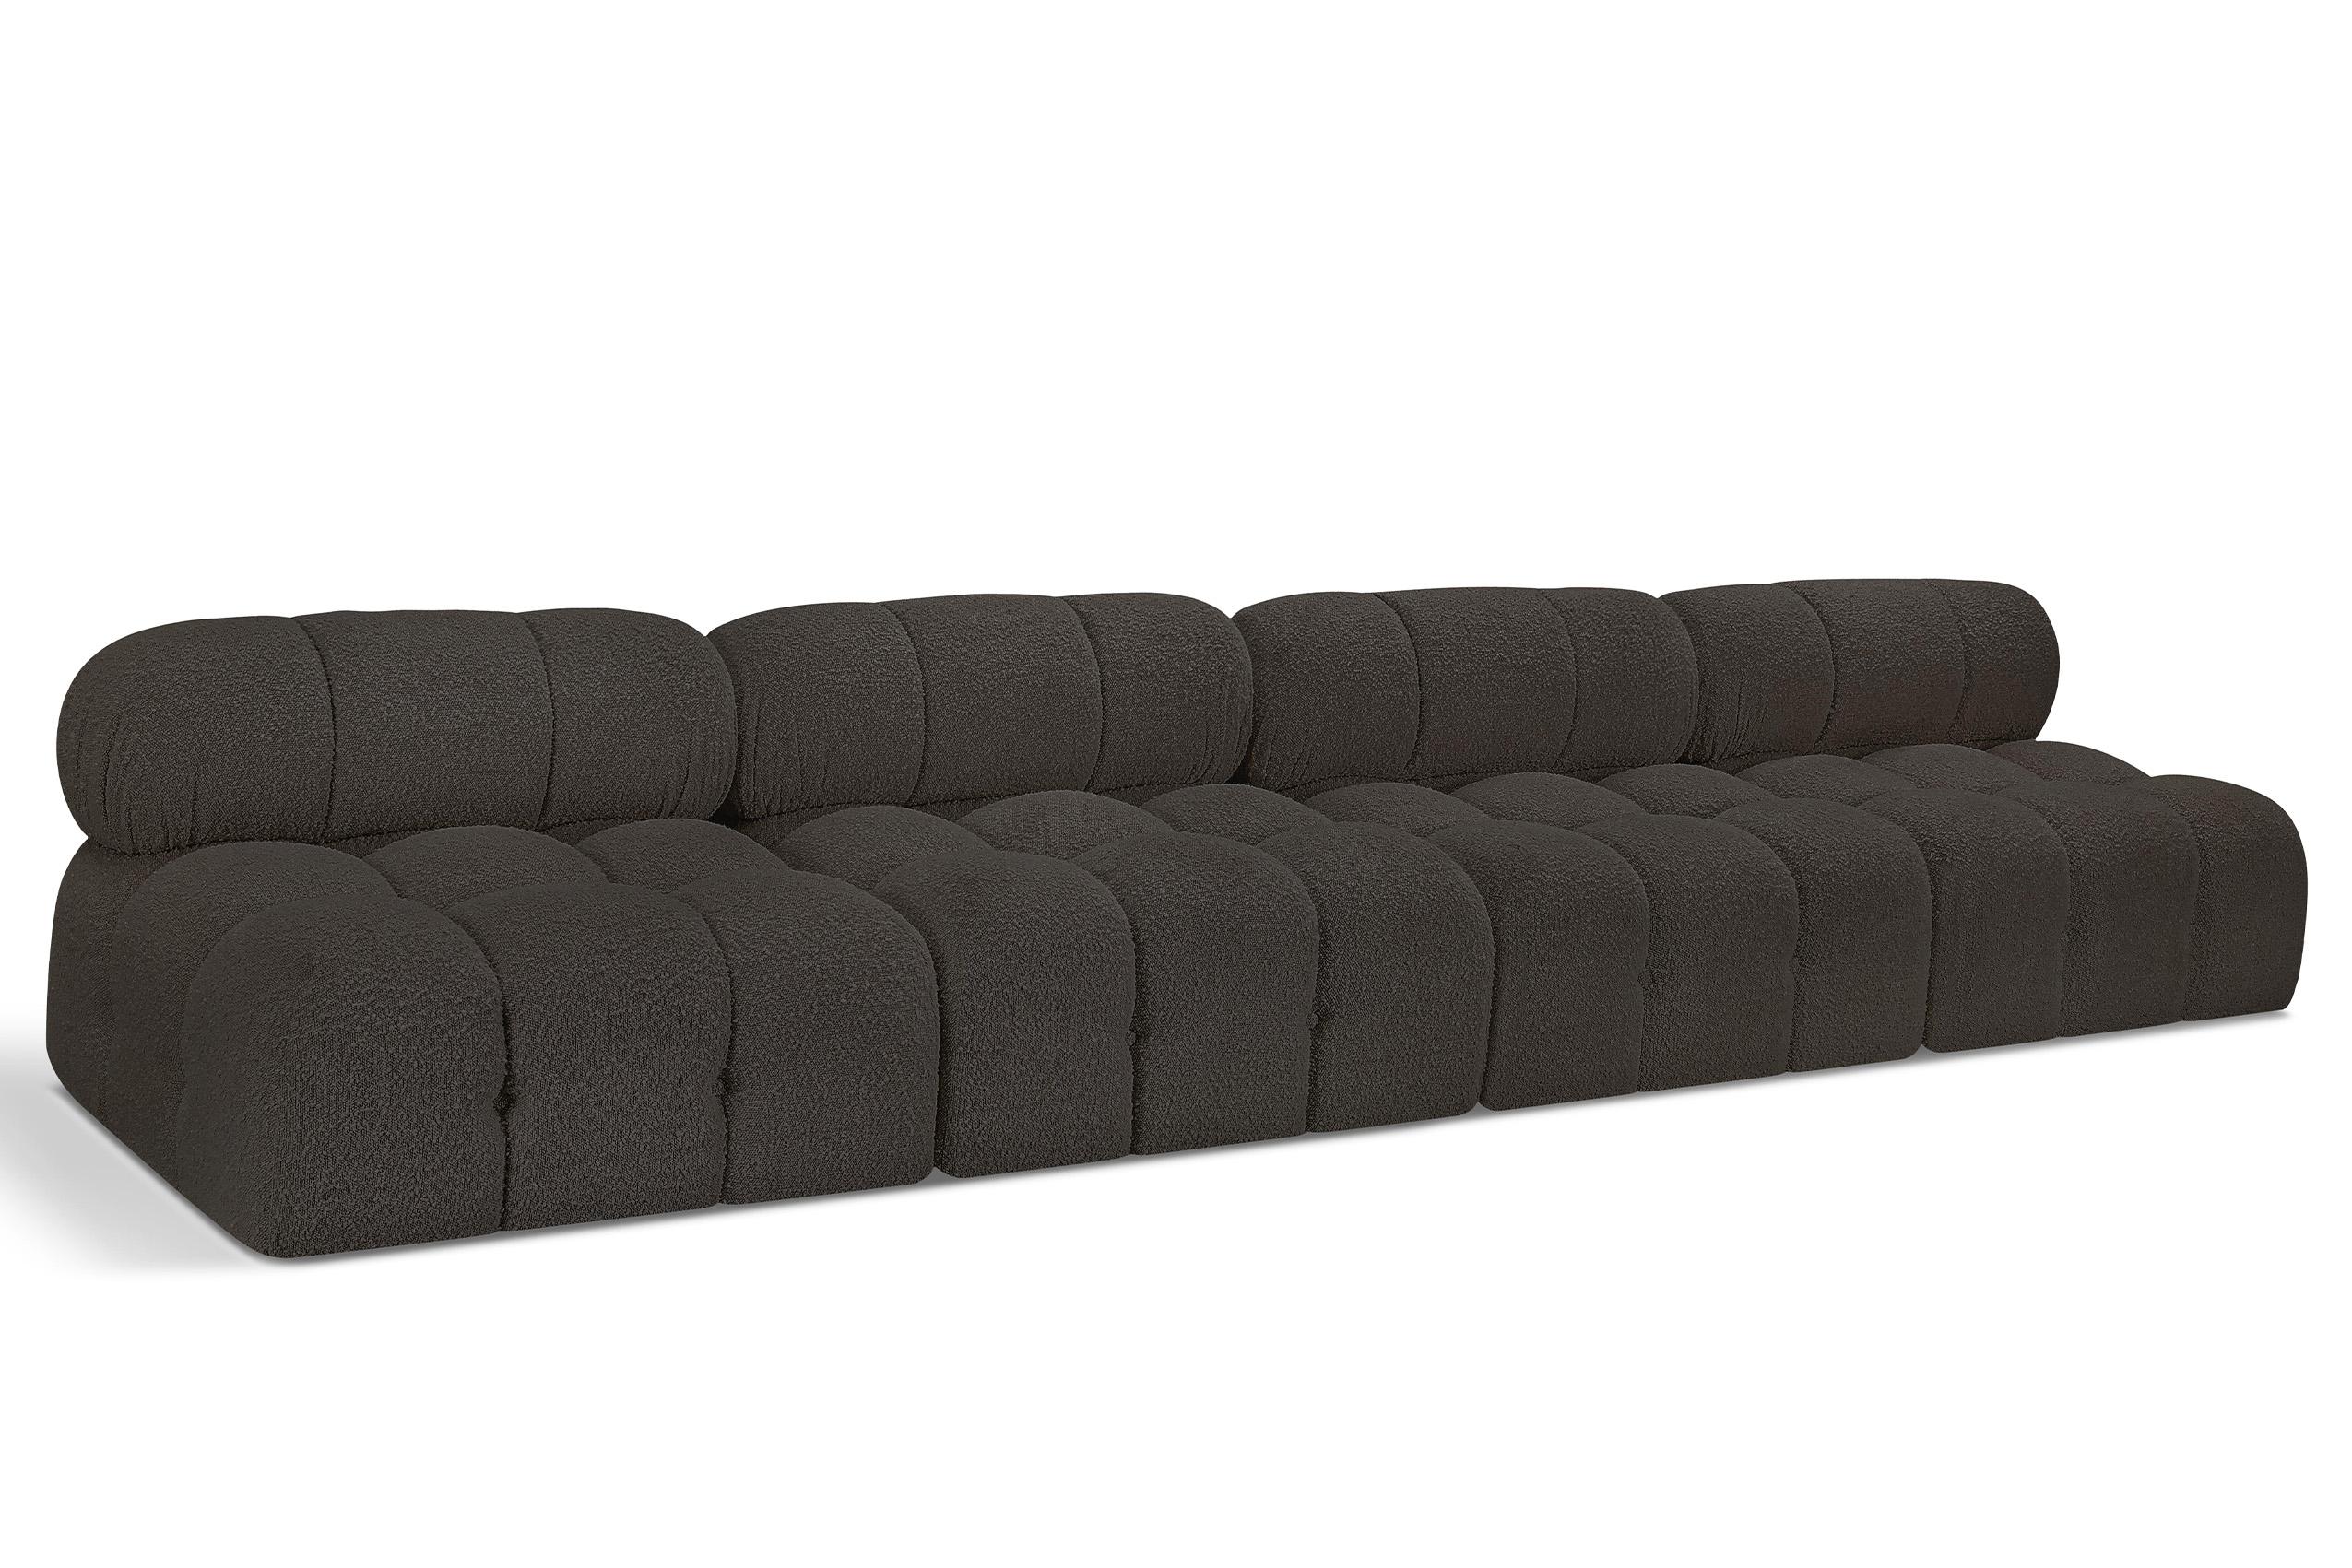 Contemporary, Modern Modular Sofa AMES 611Brown-S136B 611Brown-S136B in Brown 